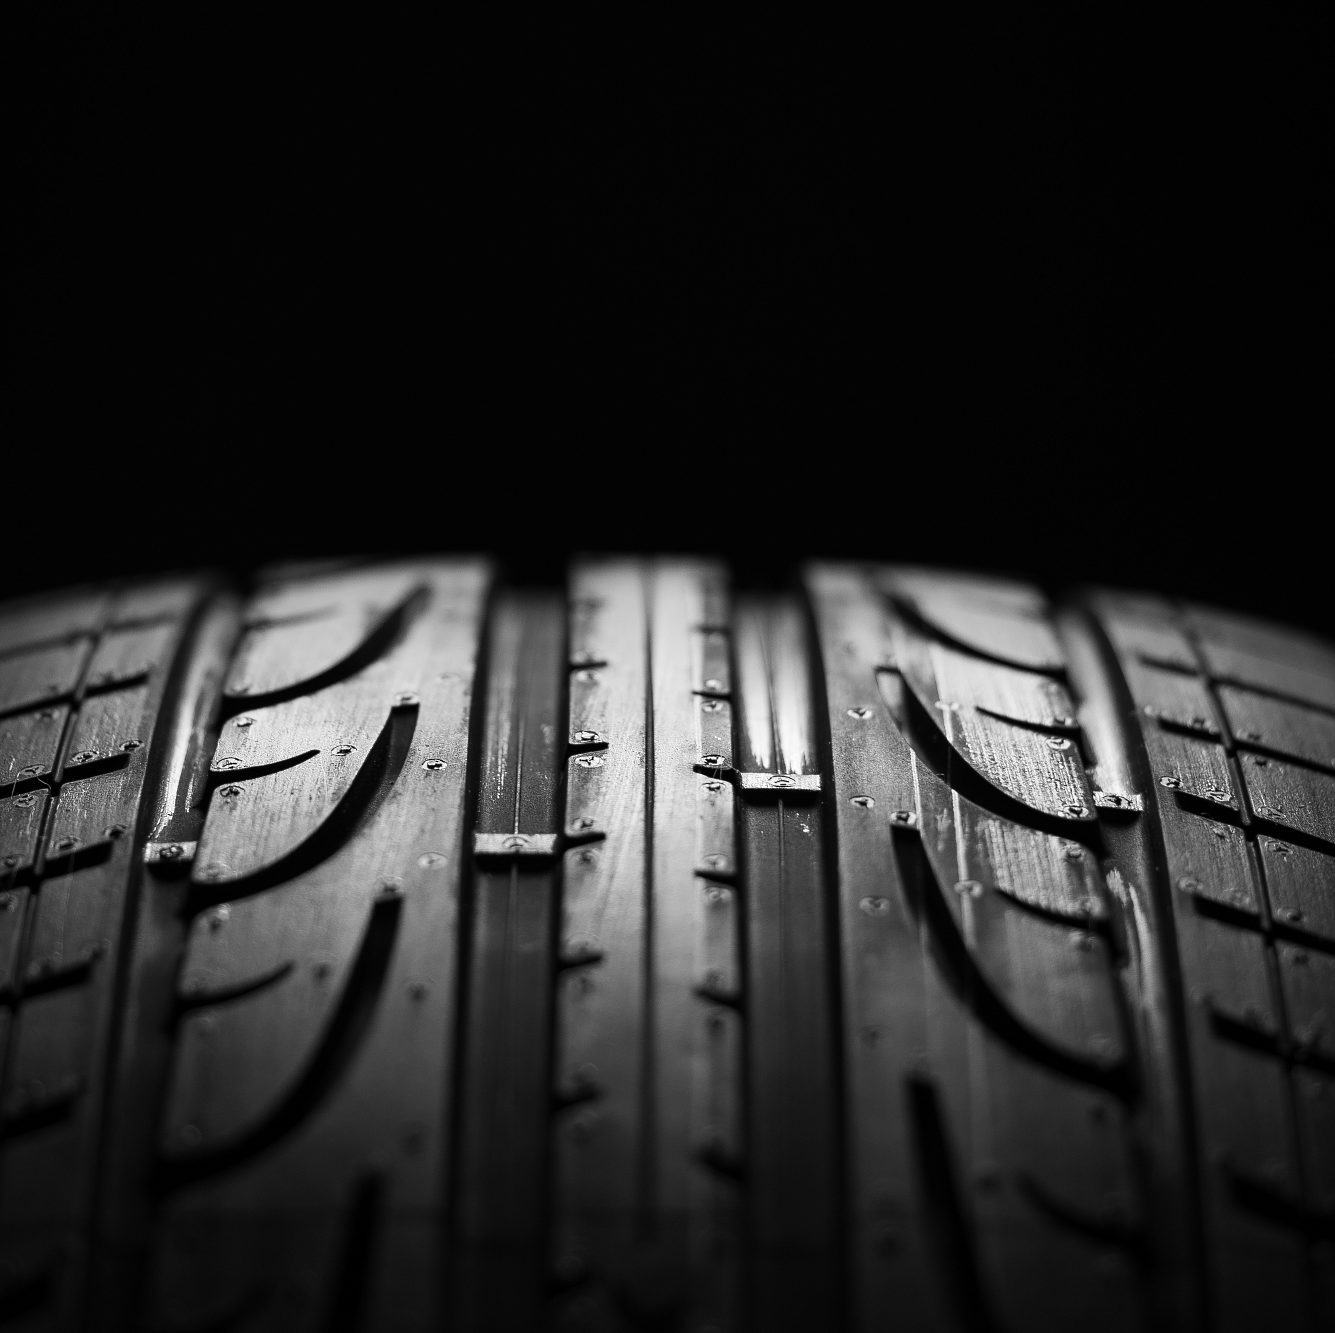 tire tread pattern close up picjumbo com e1557082741824